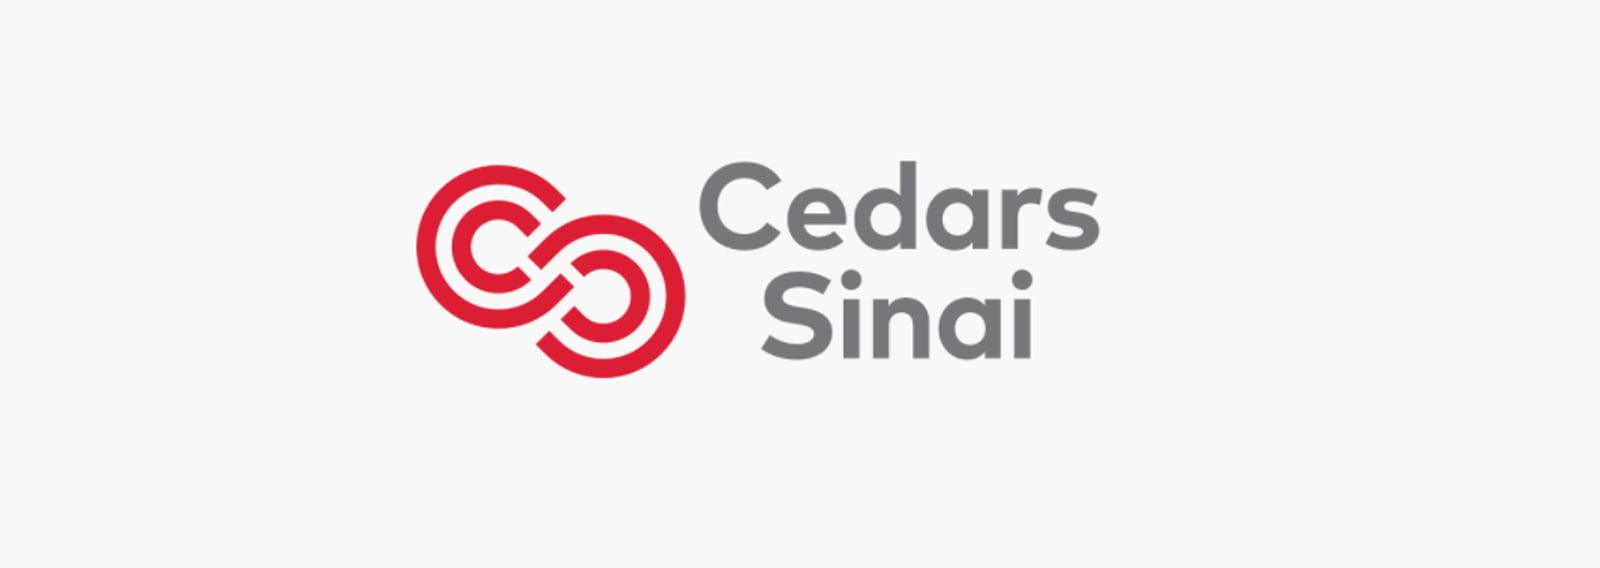 Cedars-Sinai Case Study - PathologyWatch